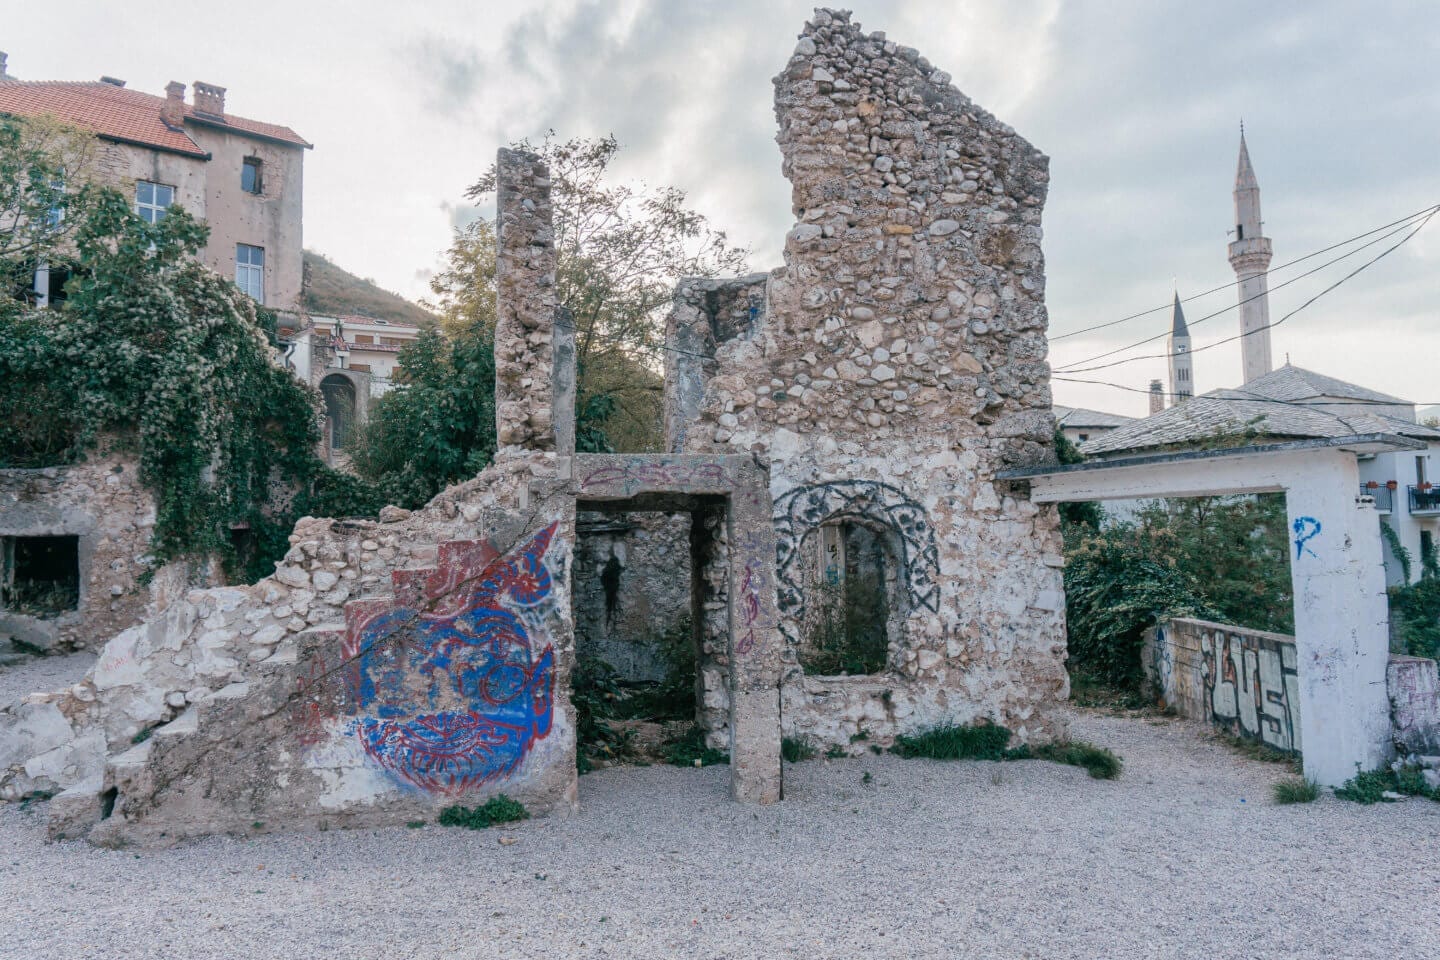 Broken down war buildings with graffiti in Mostar